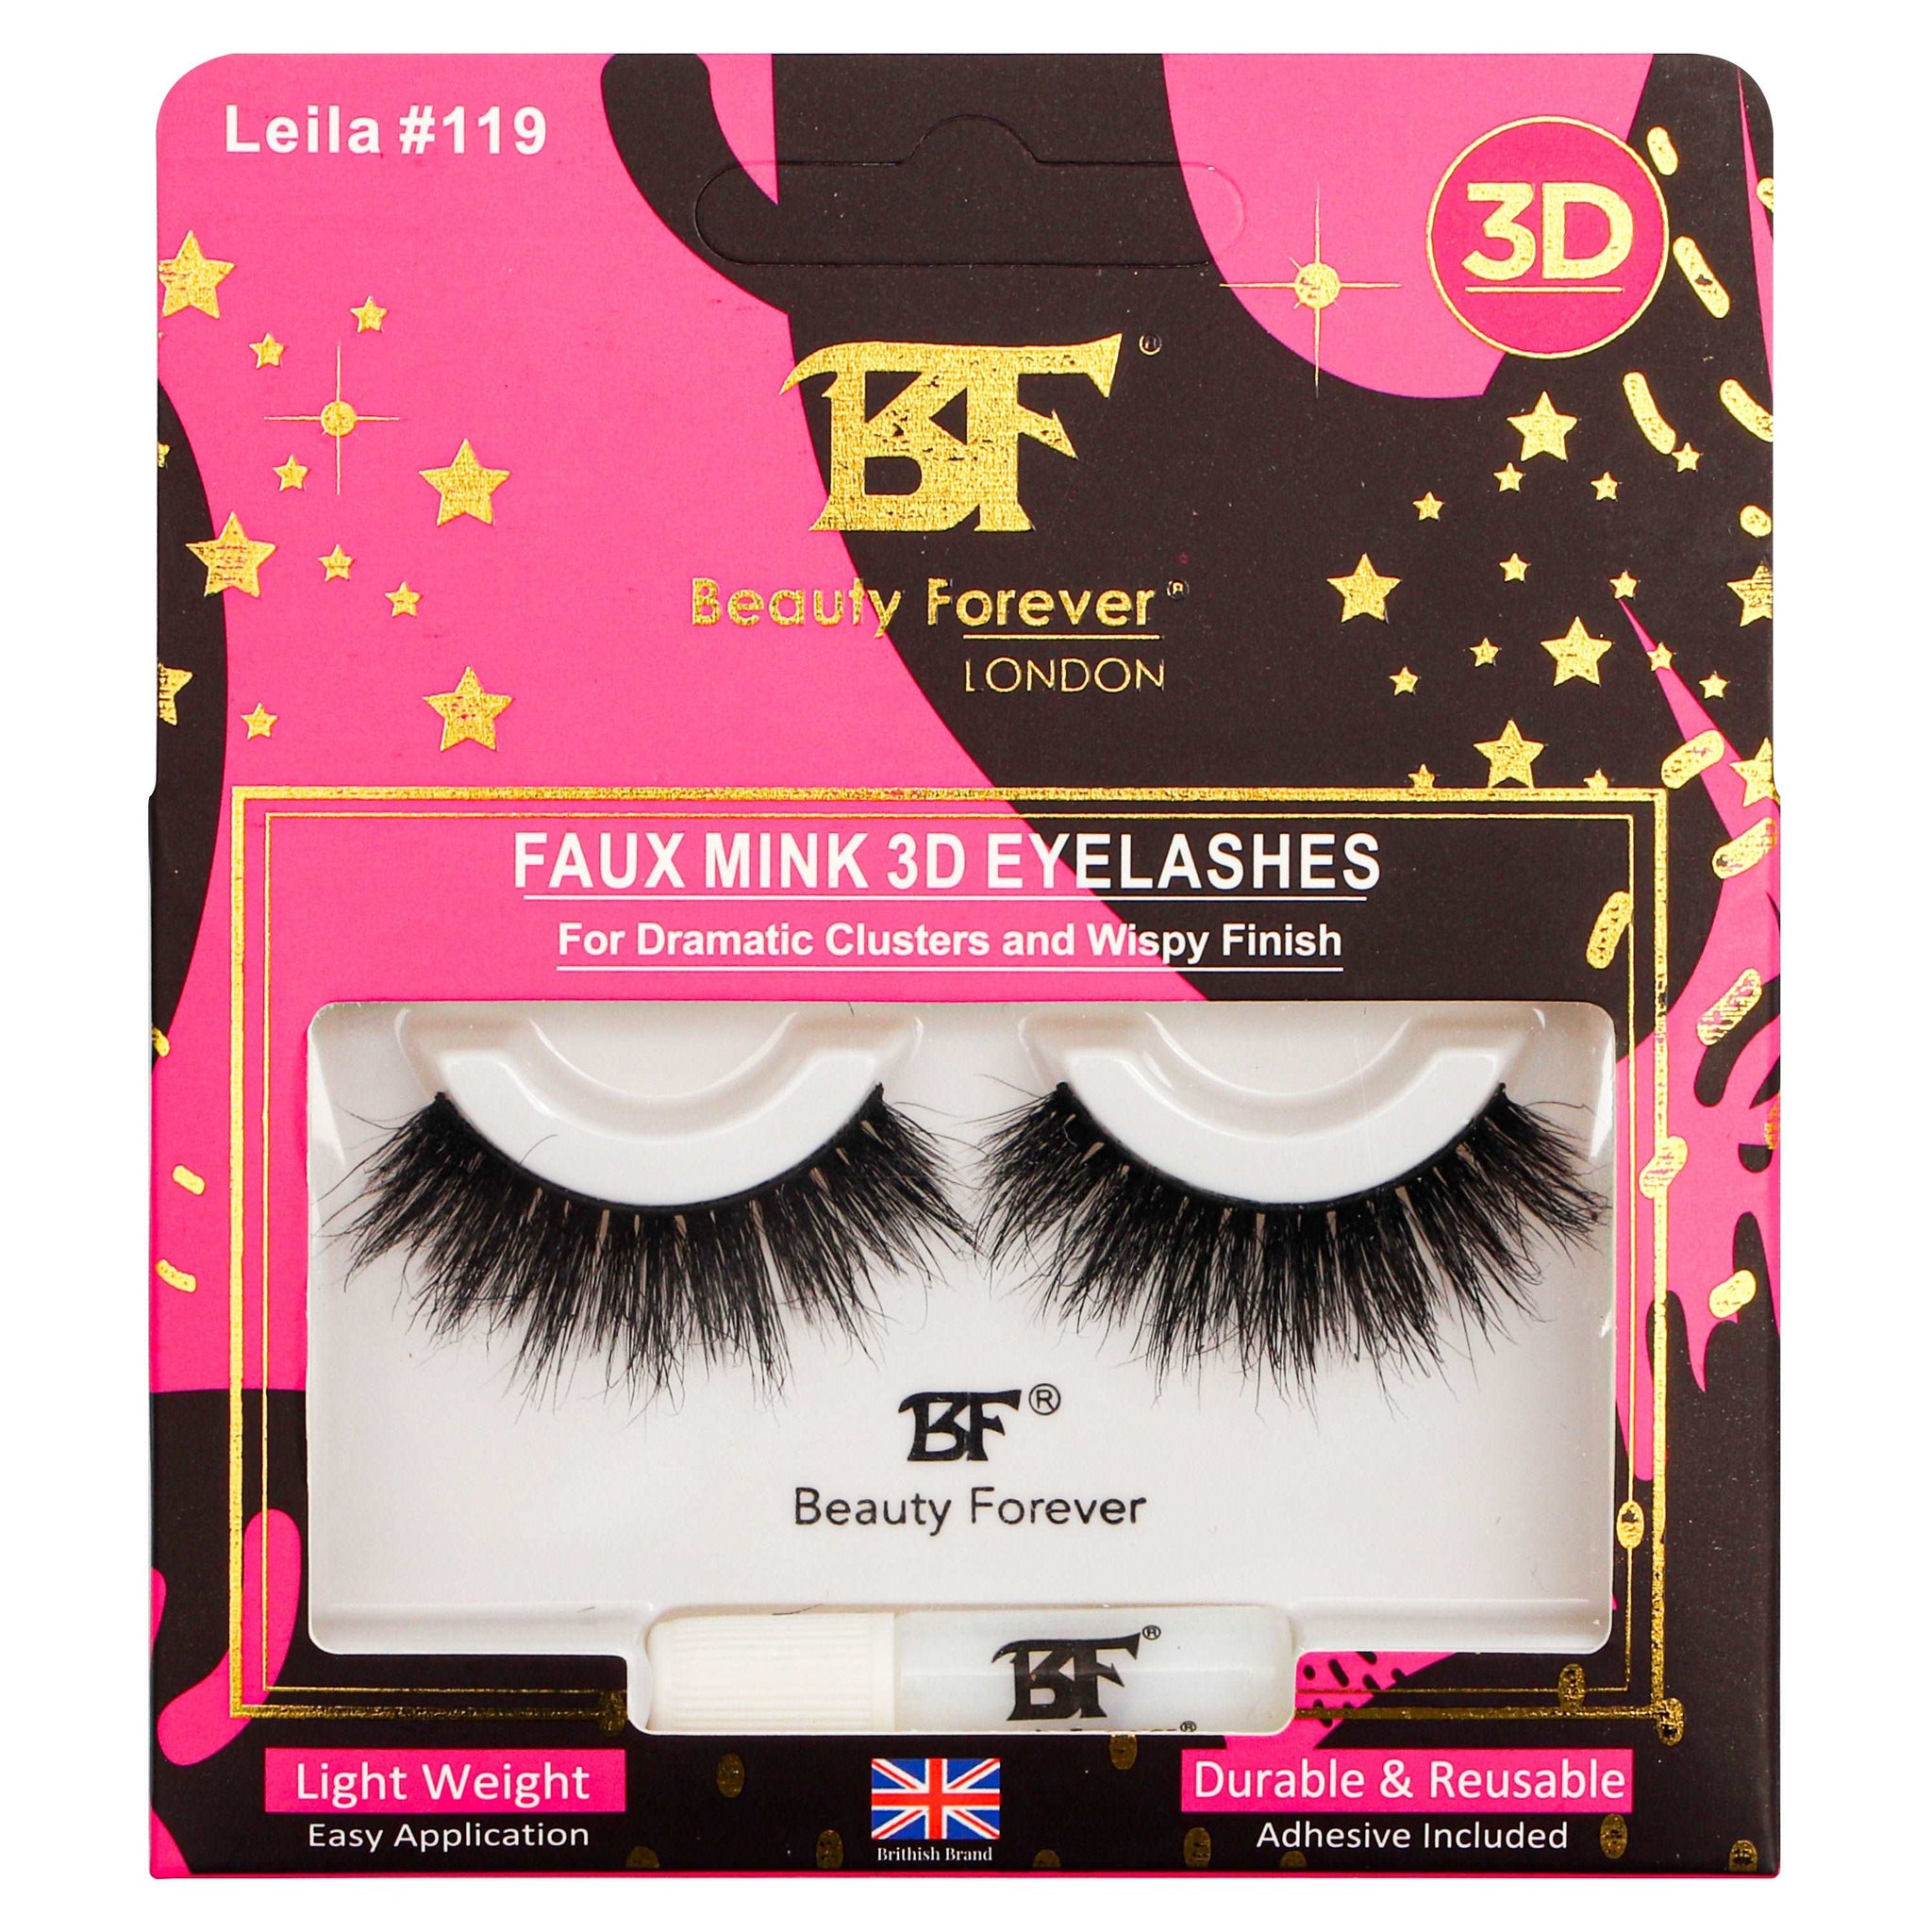 Beauty Forever Faux Mink 3D False Eyelashes in Leila #119